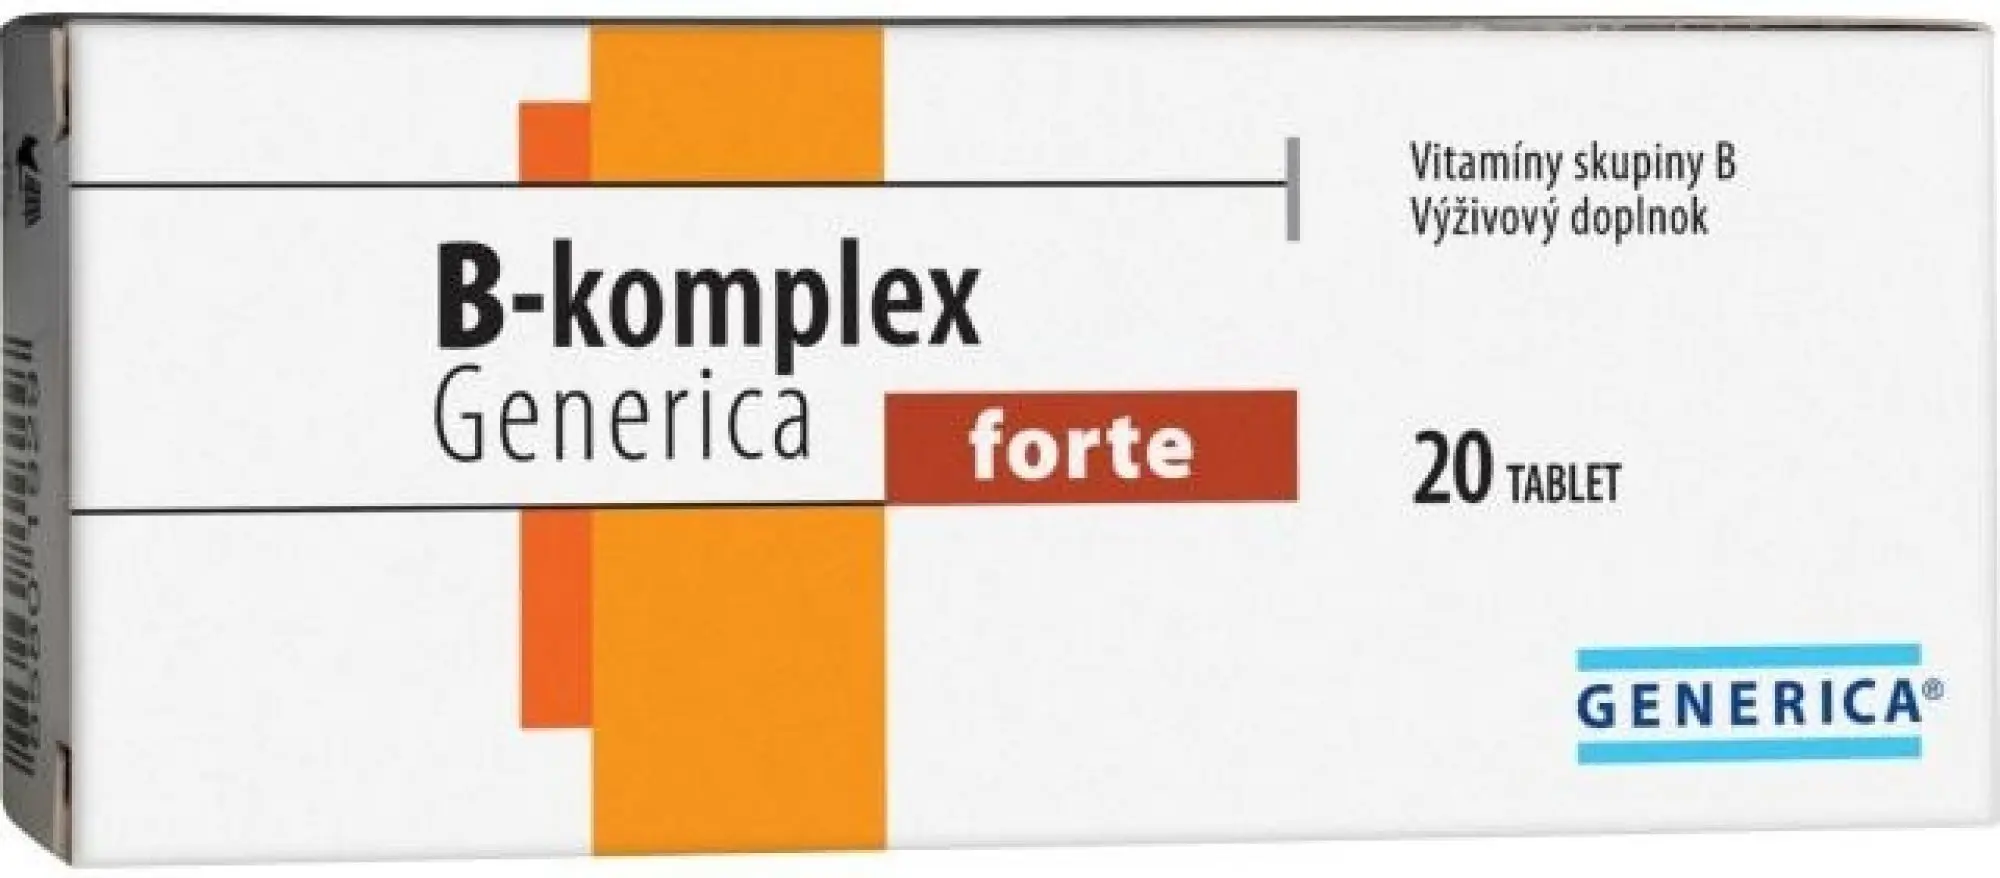 Generica B-komplex Forte 20 tablet